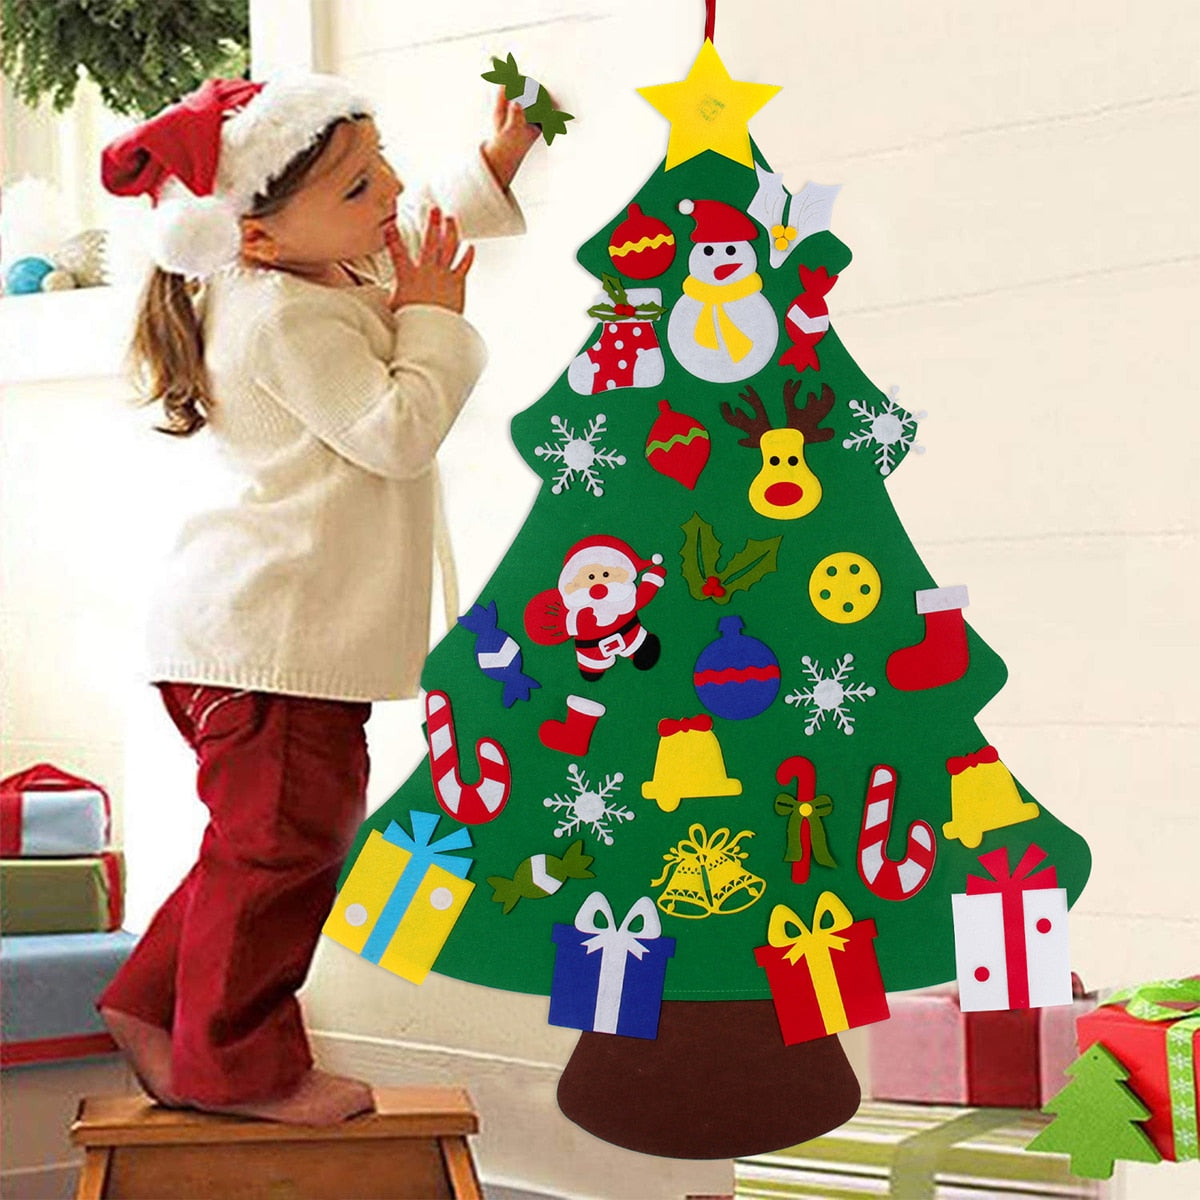 DIY Felt Christmas Tree Merry Christmas Decorations For Home 2021 Cristmas Ornament Xmas Navidad Gifts Santa Claus New Year Tree baby magazin 